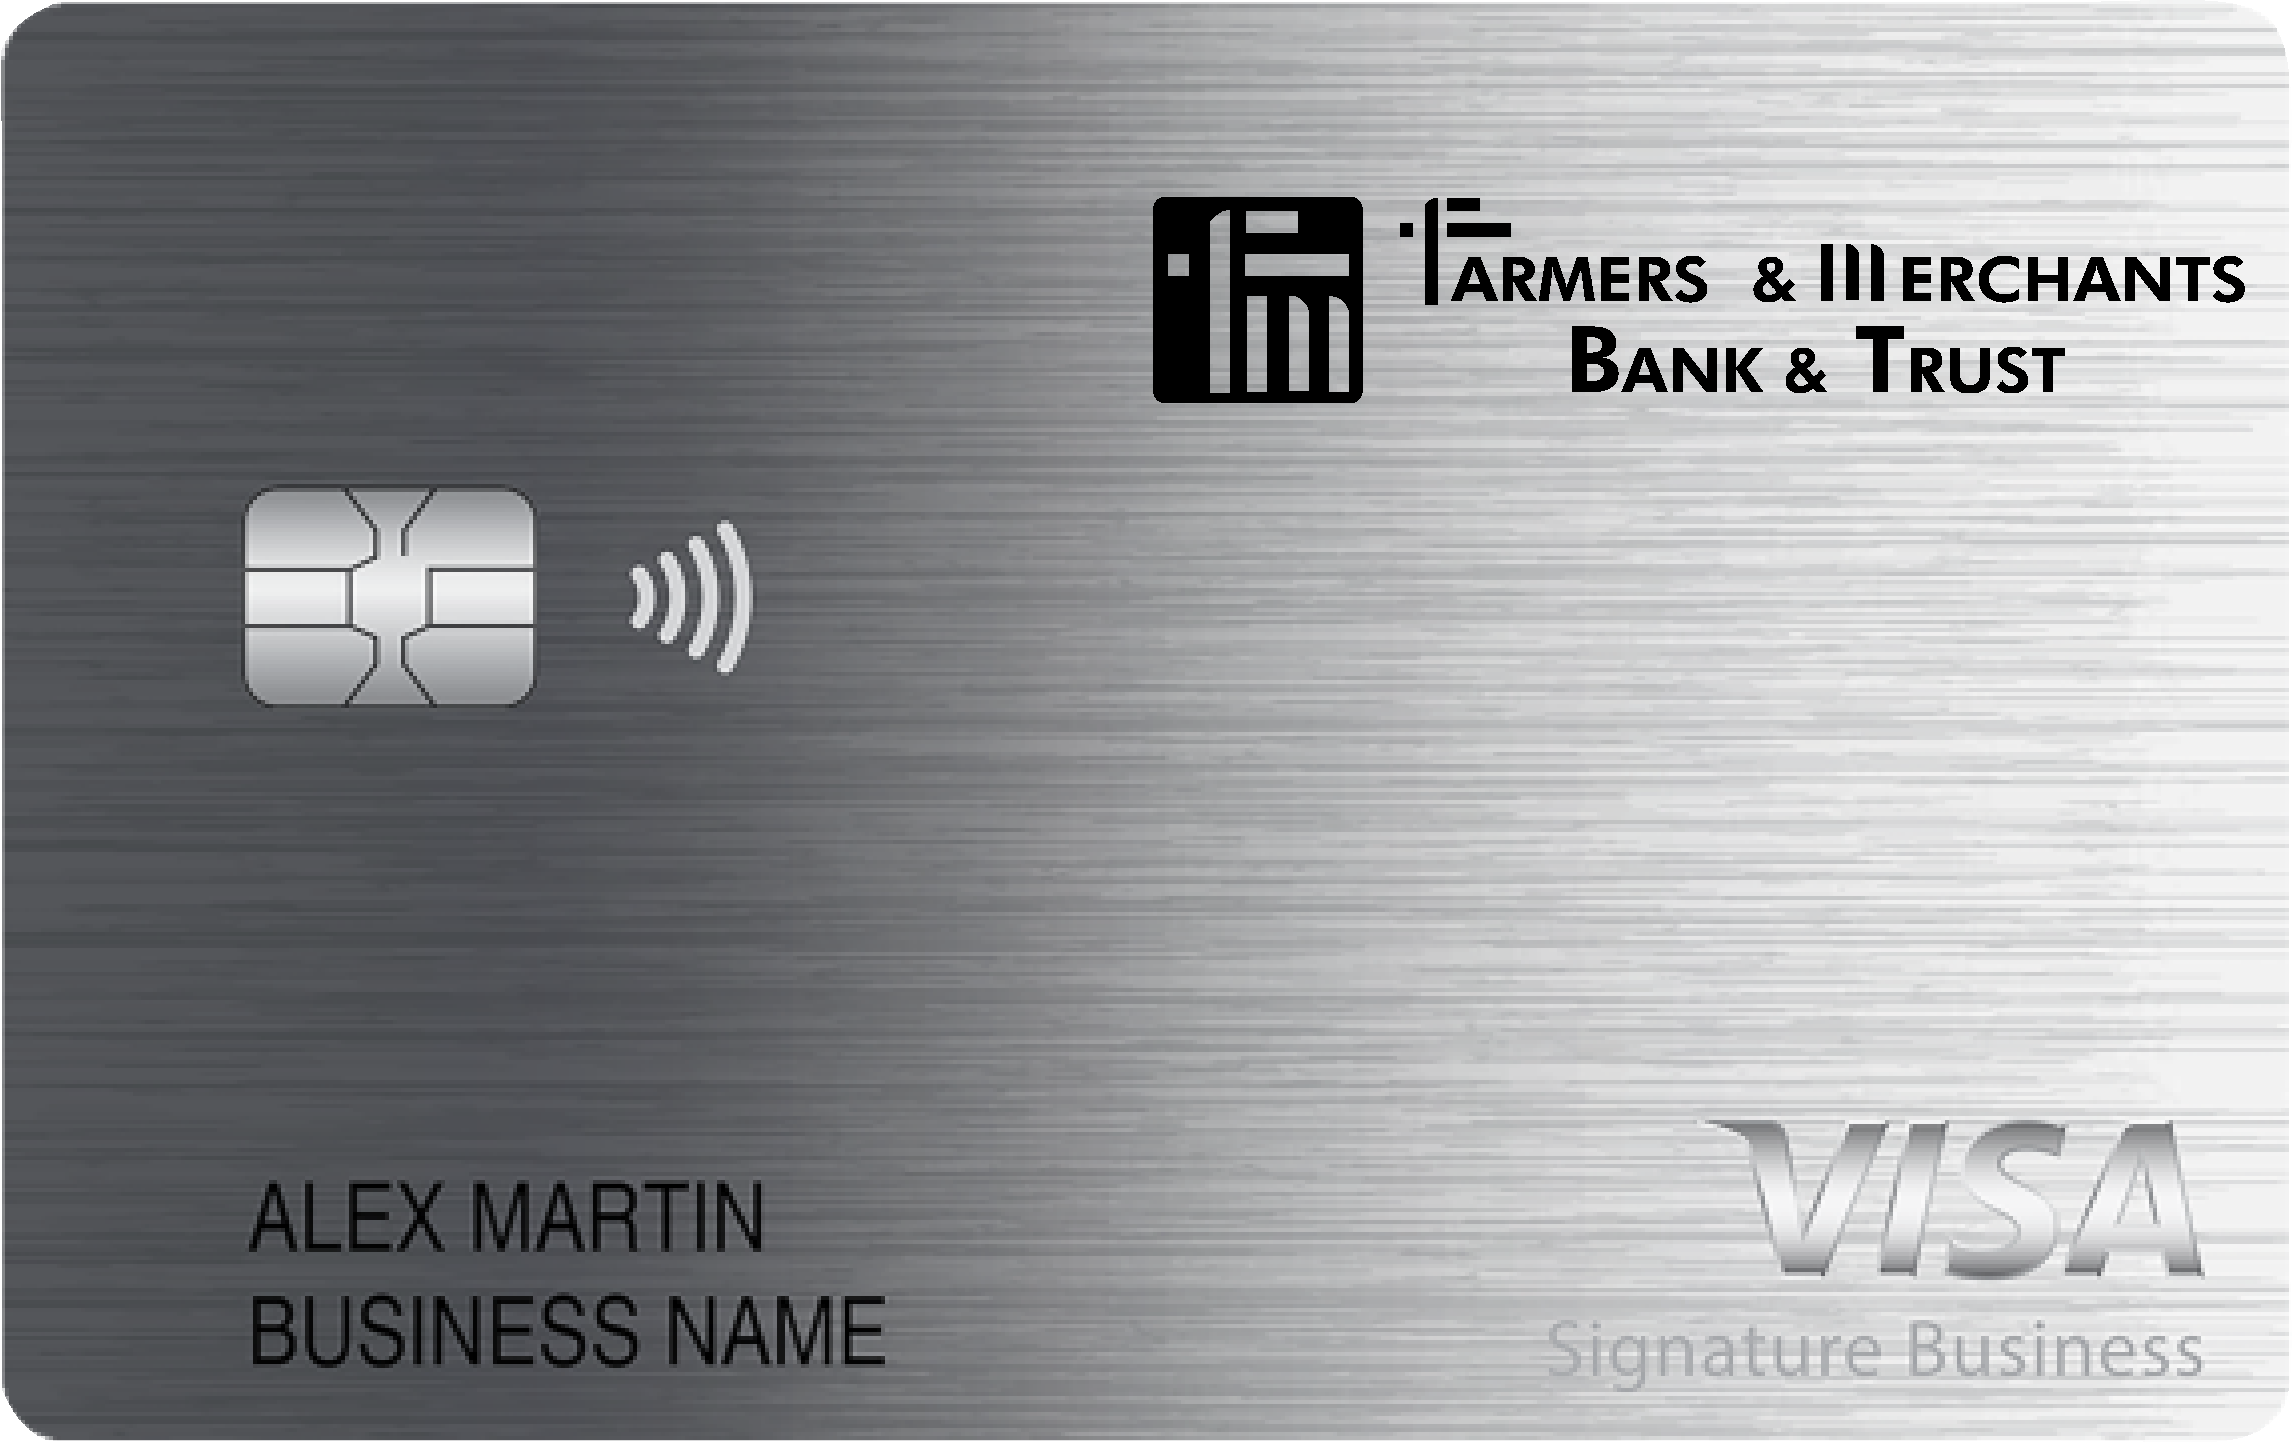 Farmers & Merchants Bank & Trust Smart Business Rewards Card